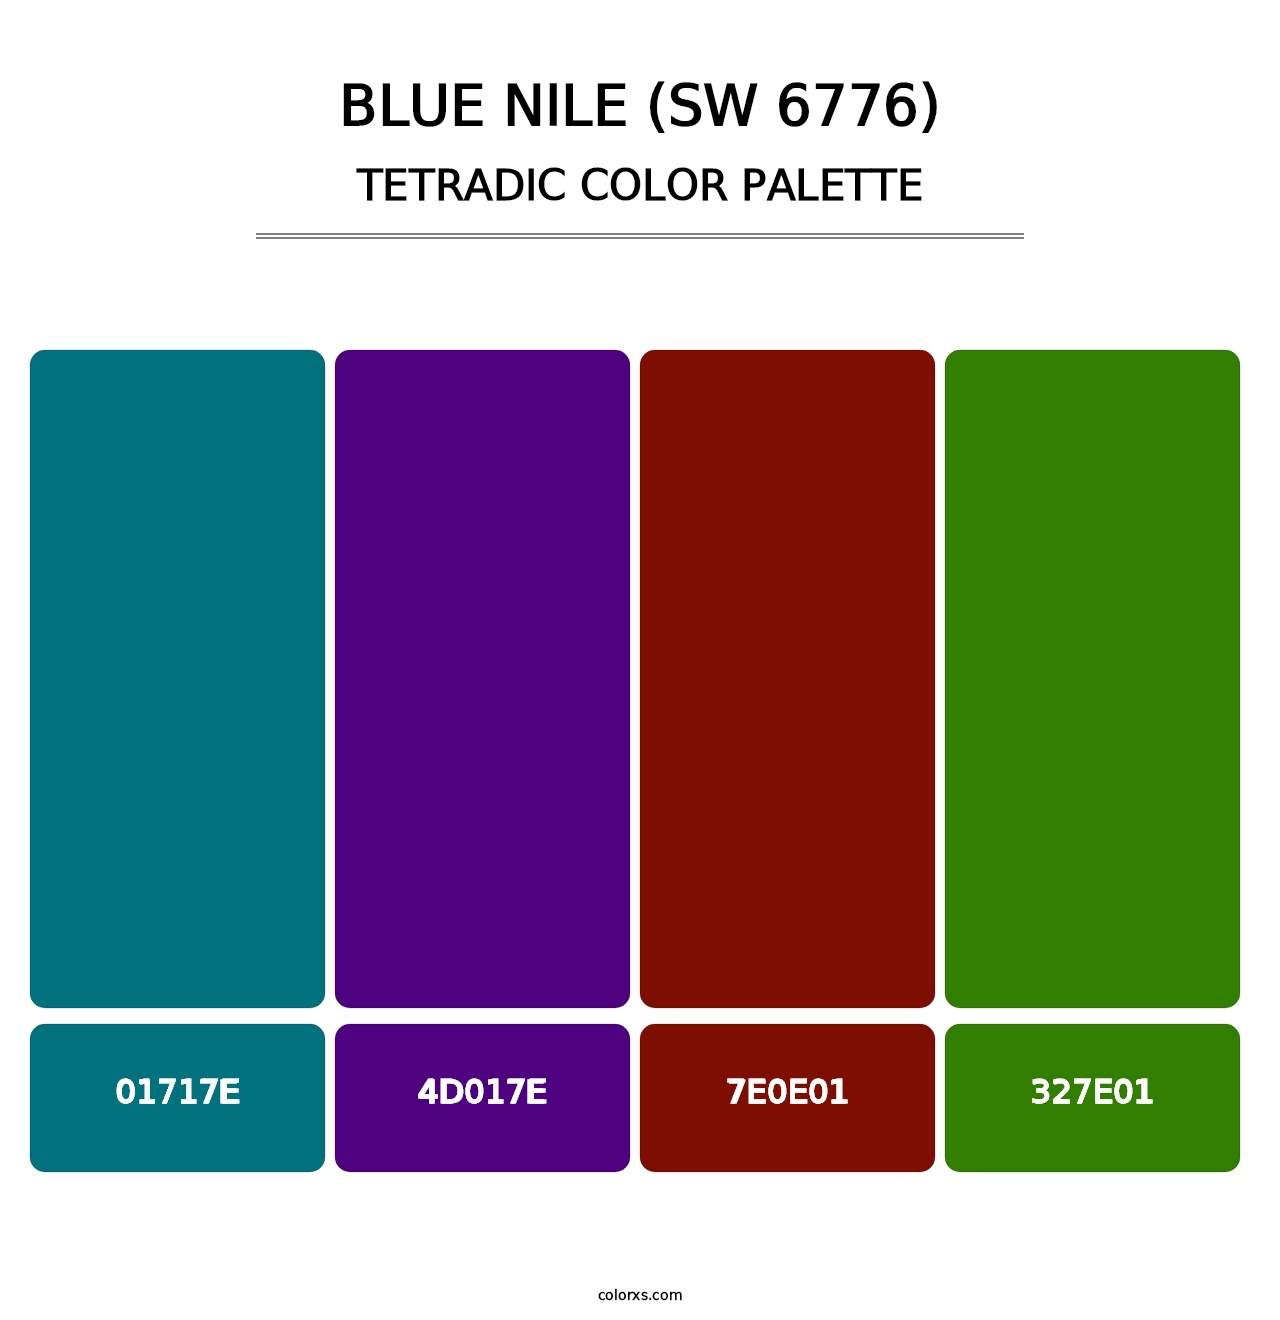 Blue Nile (SW 6776) - Tetradic Color Palette